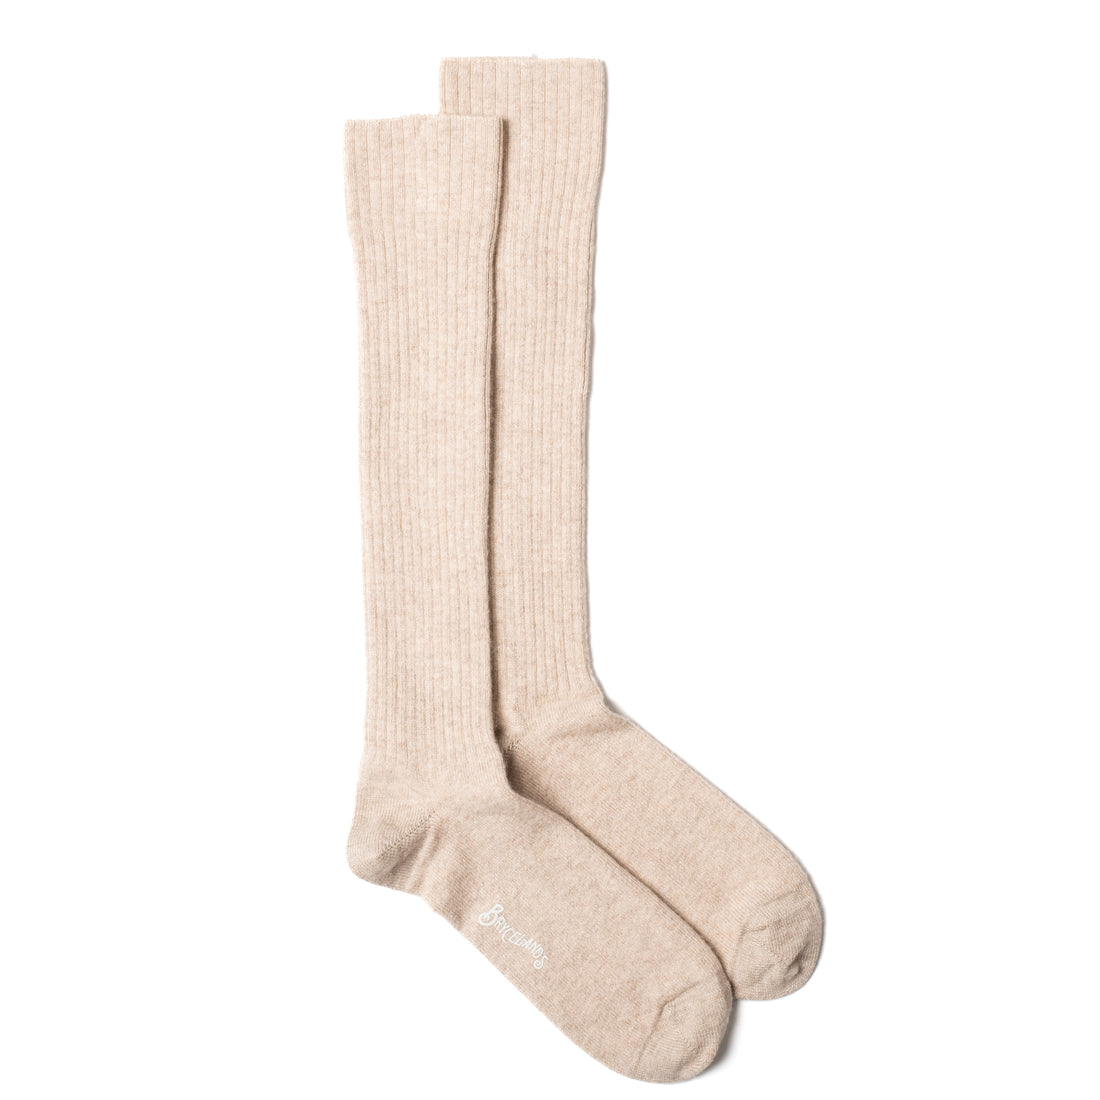 Bryceland's Cashmere Socks Oat